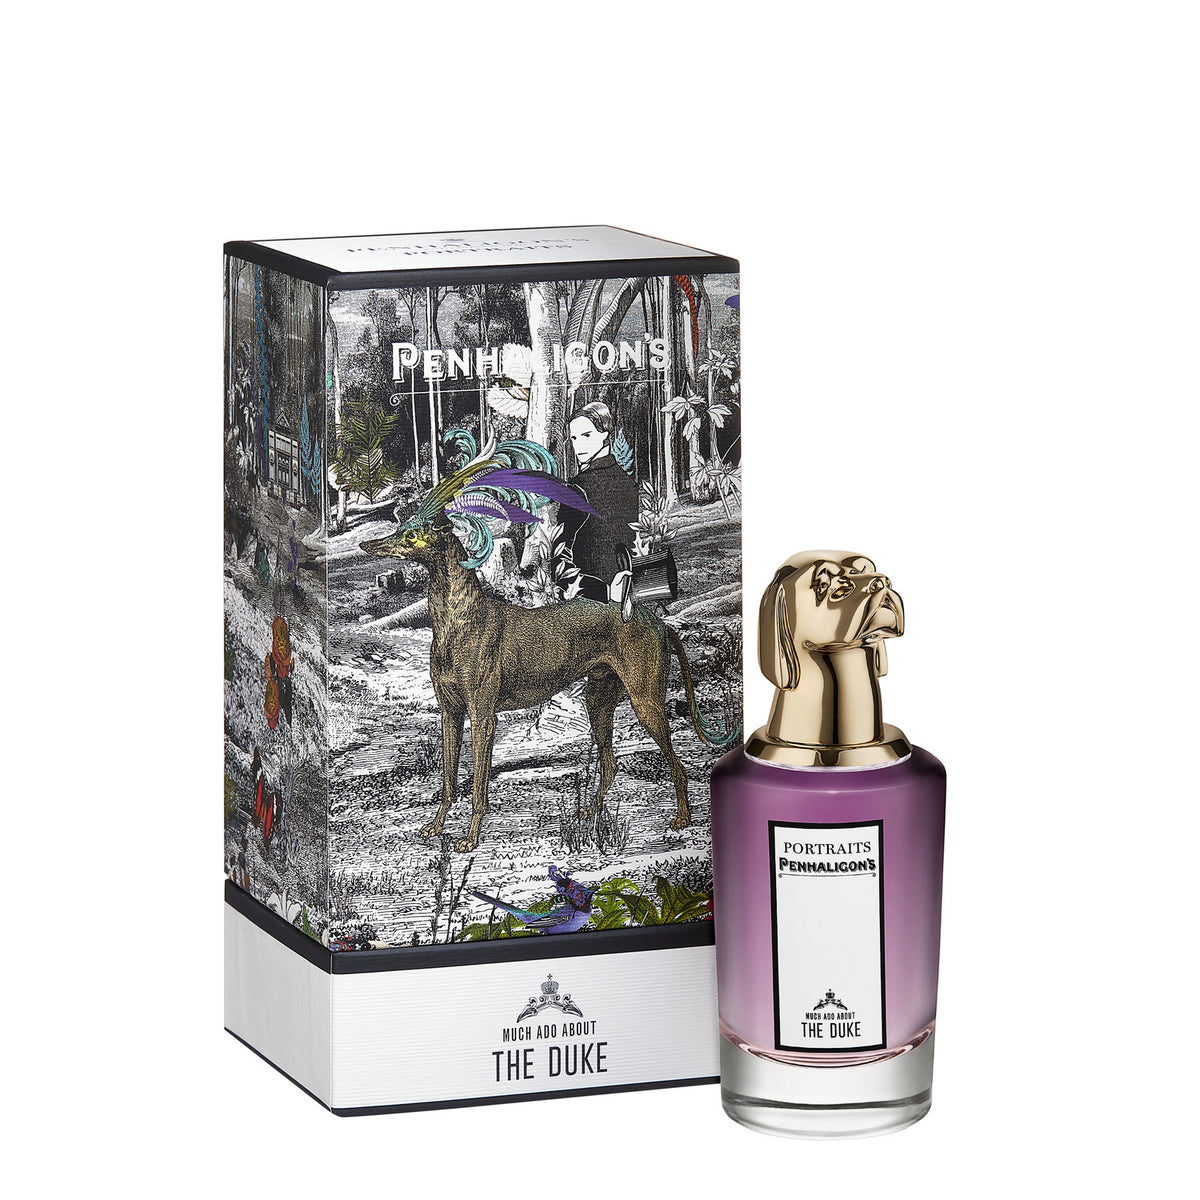 Much Ado About The Duke Eau de Parfum, 75ml